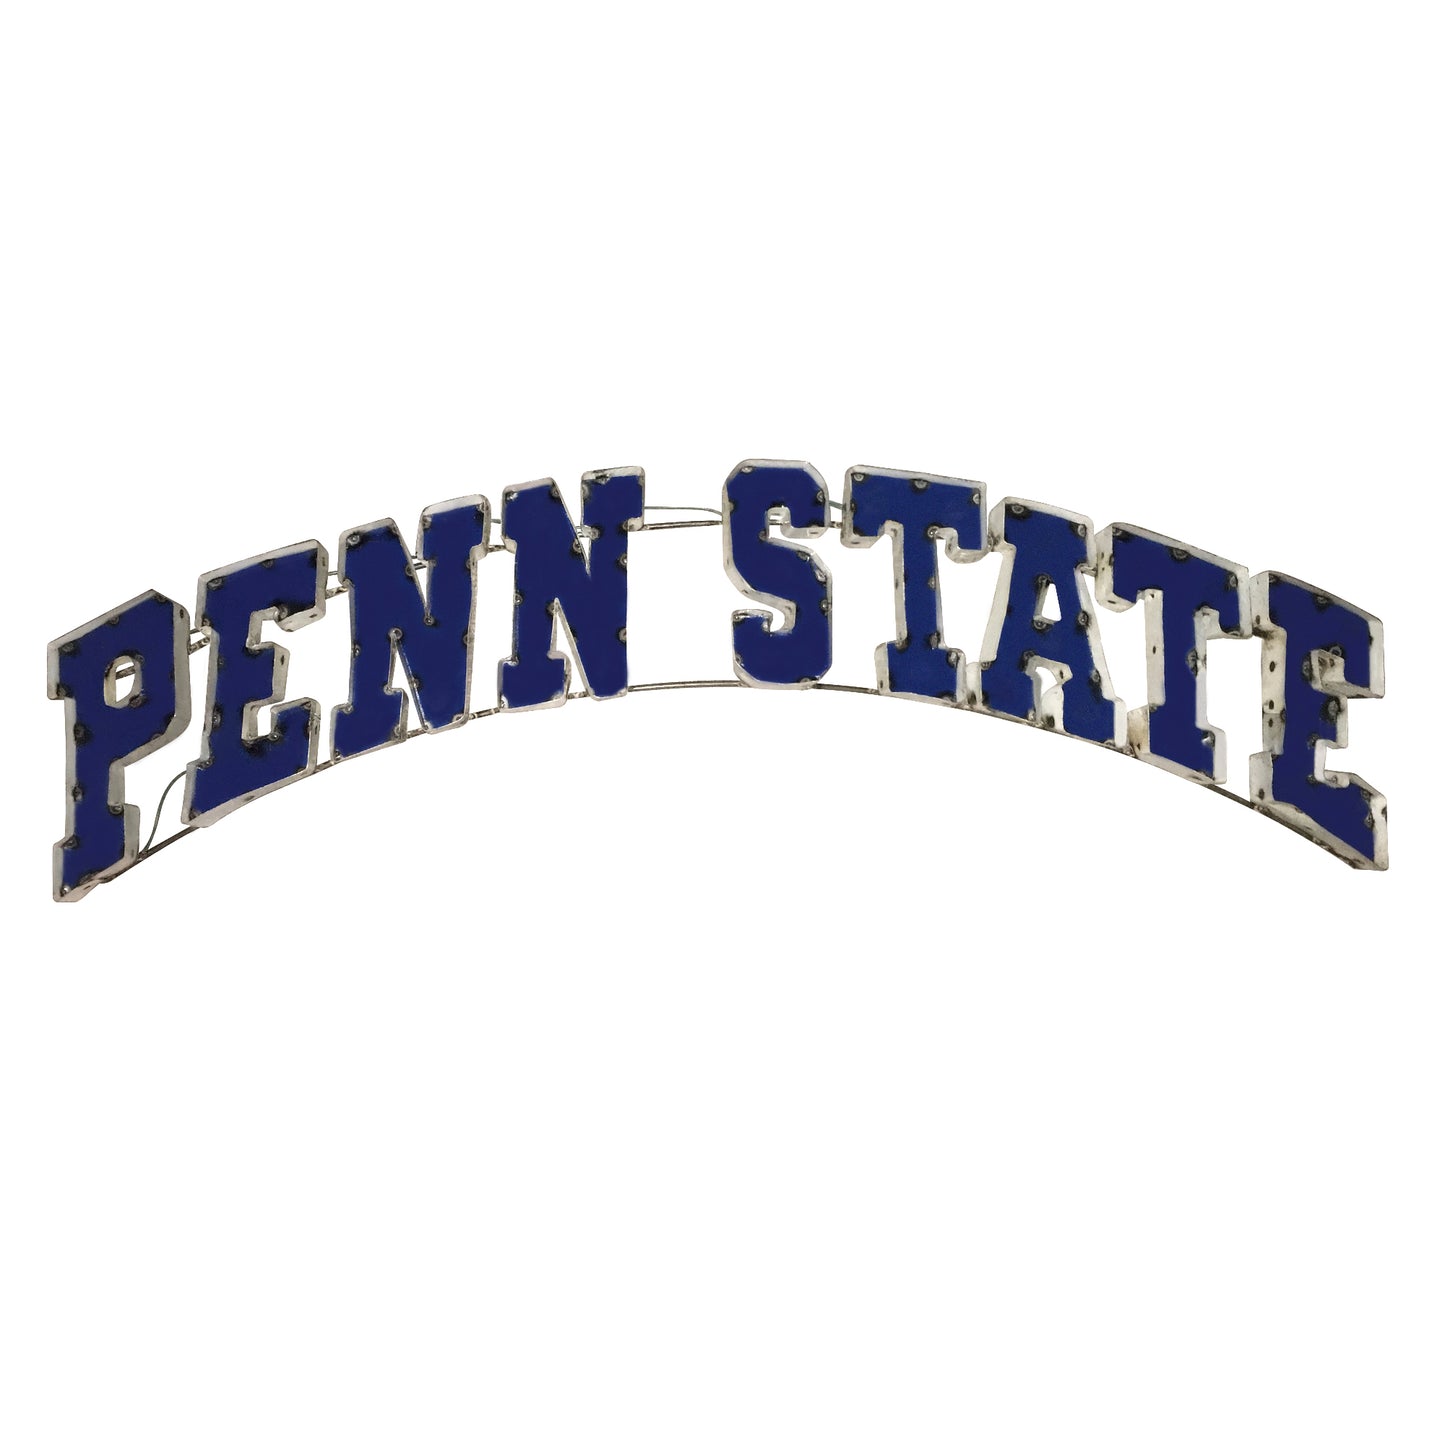 Penn State University "Penn State" Recycled Metal Wall Decor